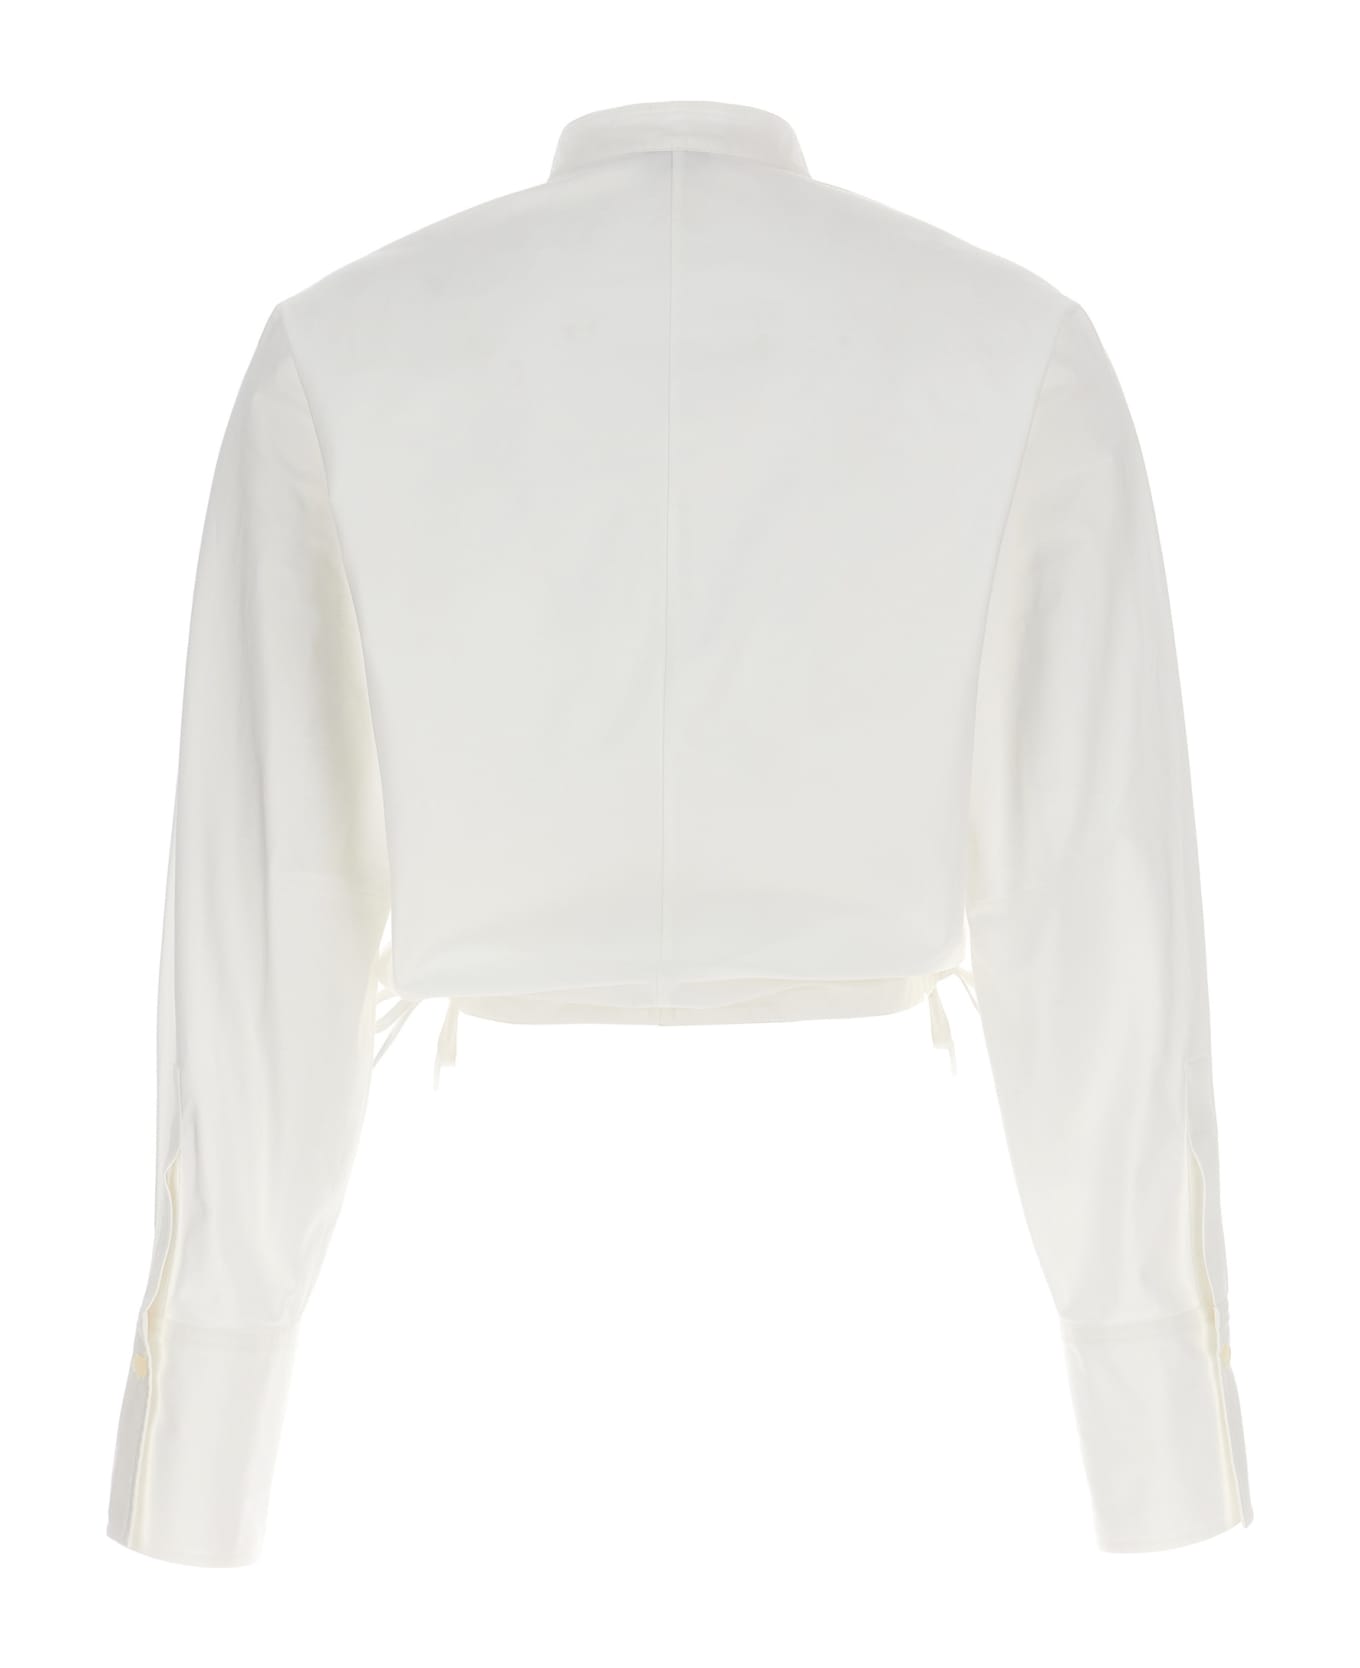 Ferragamo Cropped Shirt - White